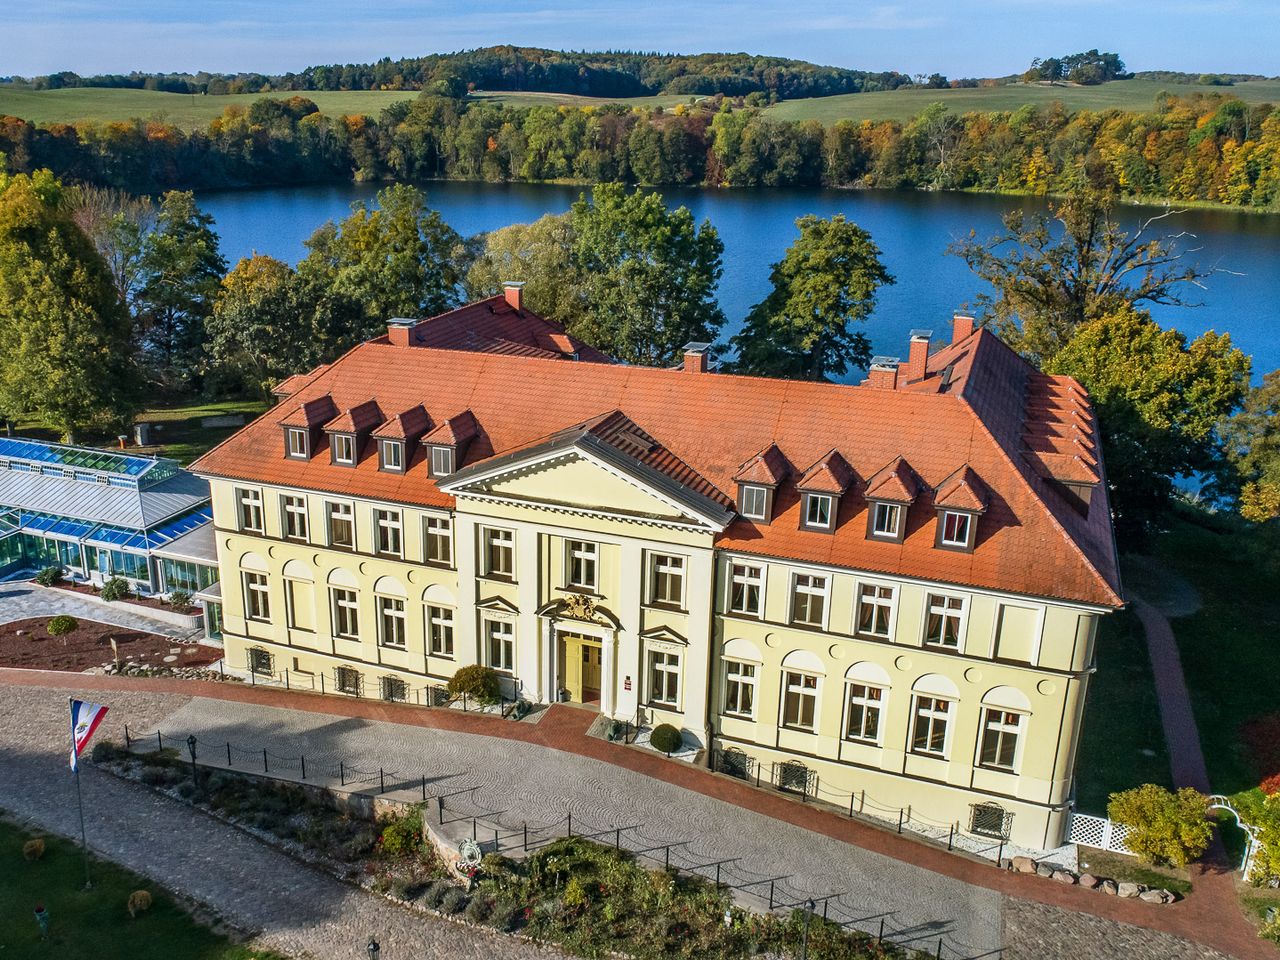 Schloss-Romantik am See in Mecklenburg